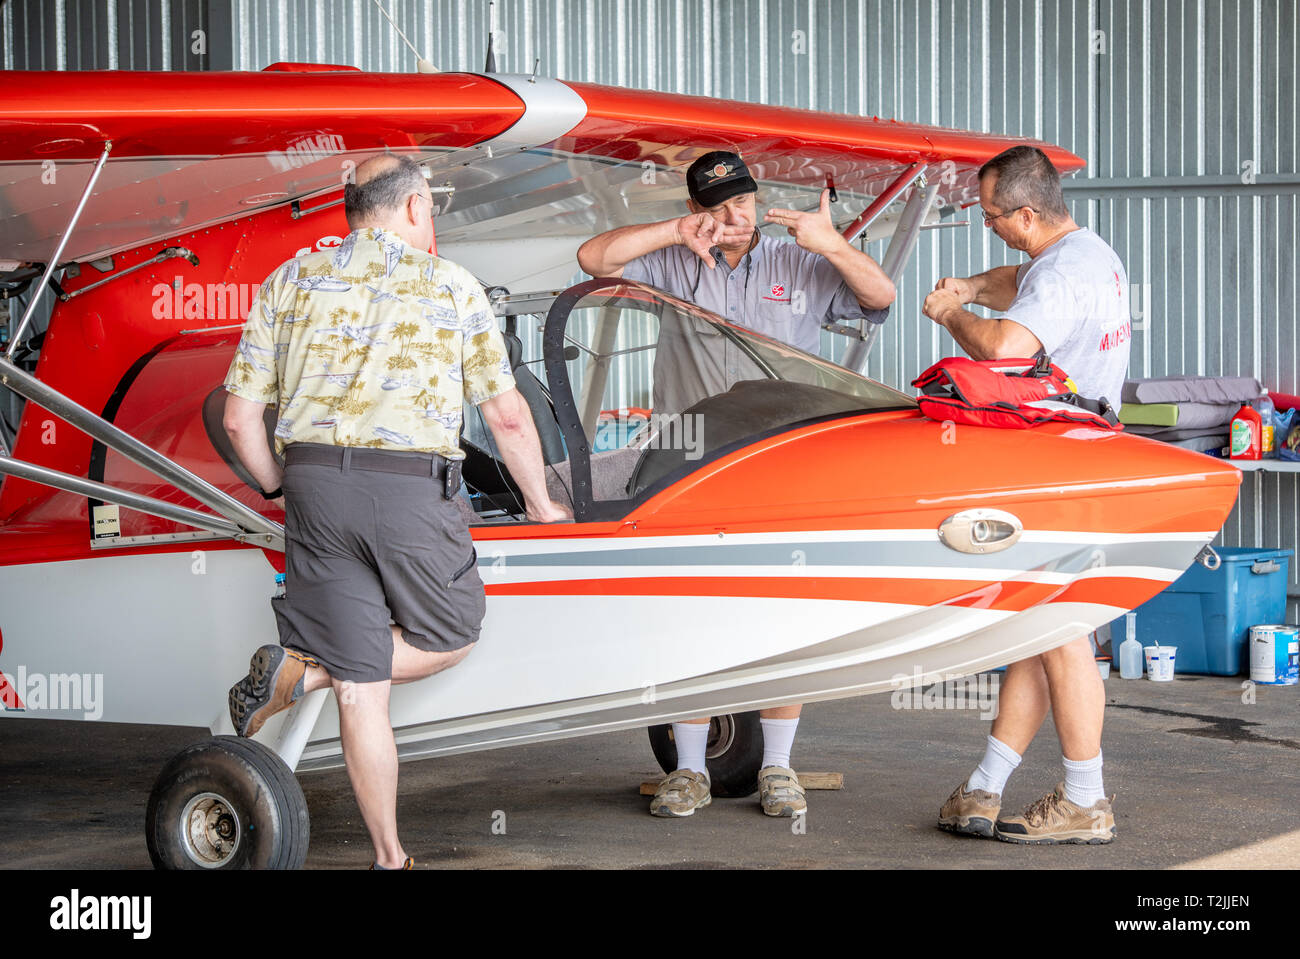 Group of men gather around Searey Elite Amphibious Light Sport airplane and discuss, Stevensville, MD Stock Photo